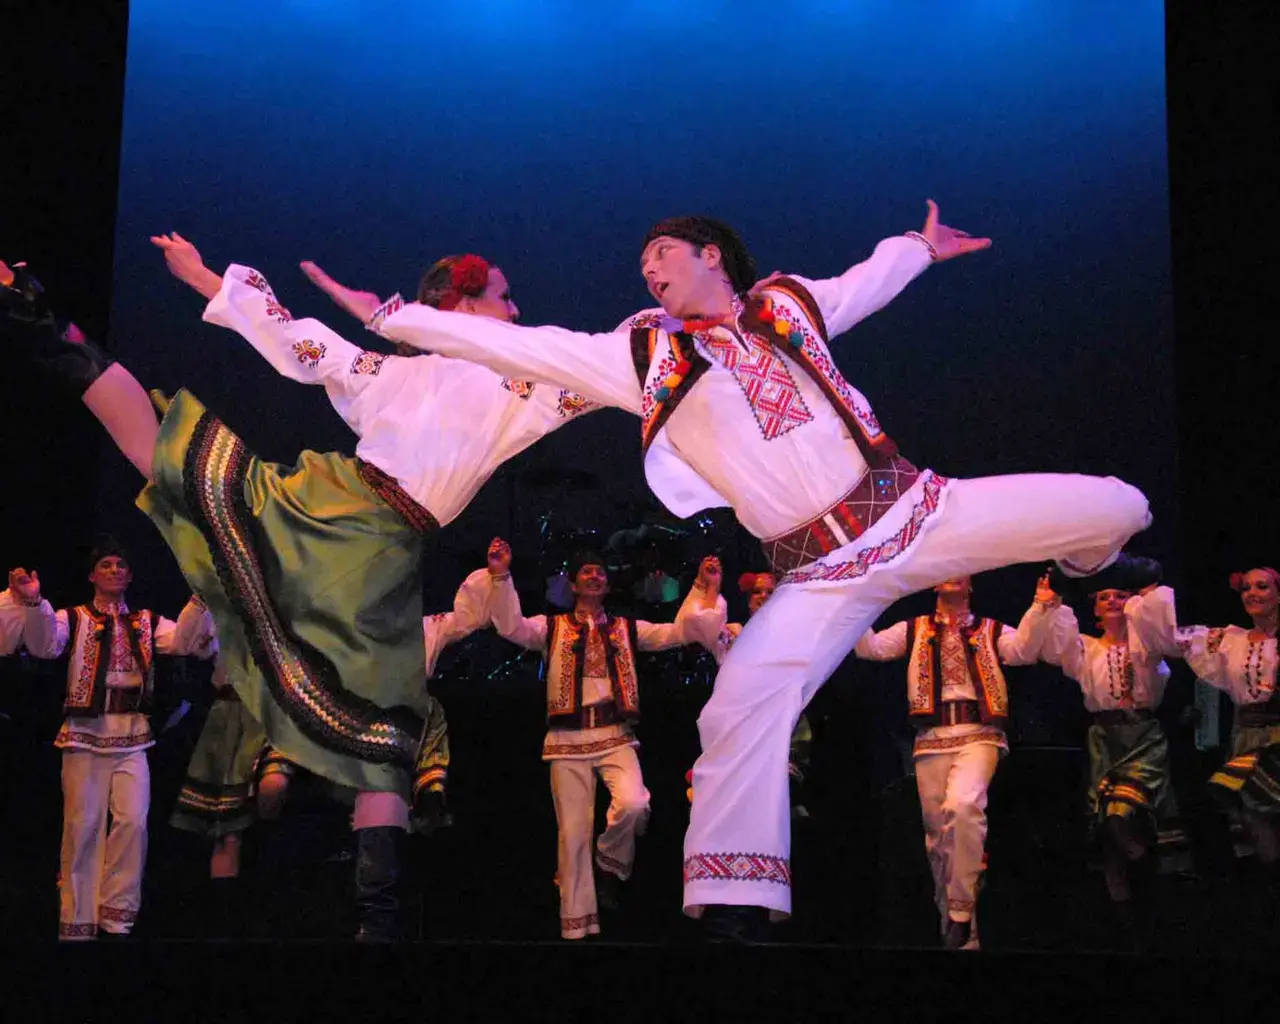 Image courtesy of Voloshky Ukrainian Dance Ensemble.